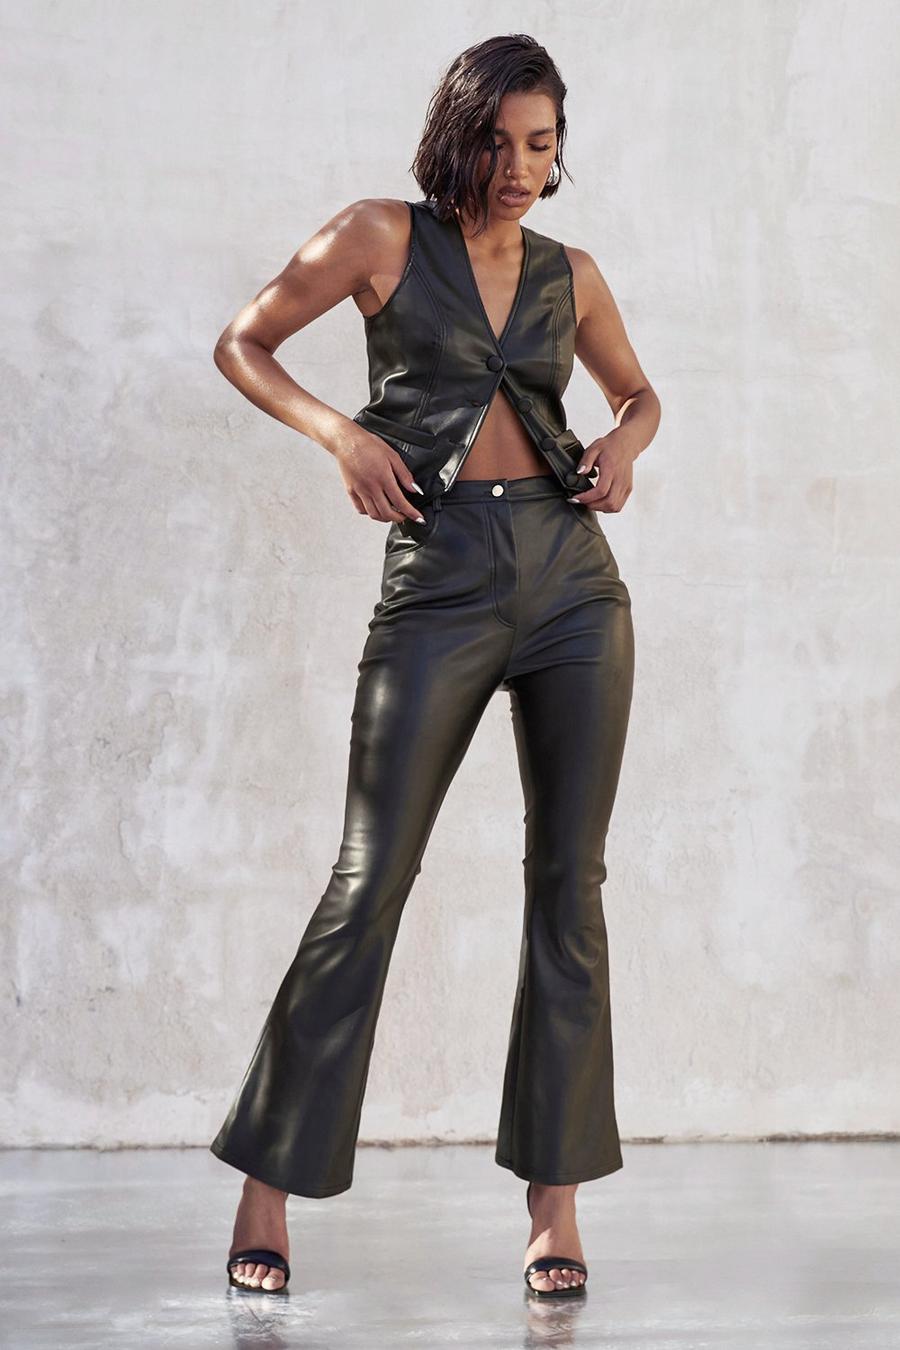 Black Kourtney Kardashian Barker Faux Leather Flared Pants